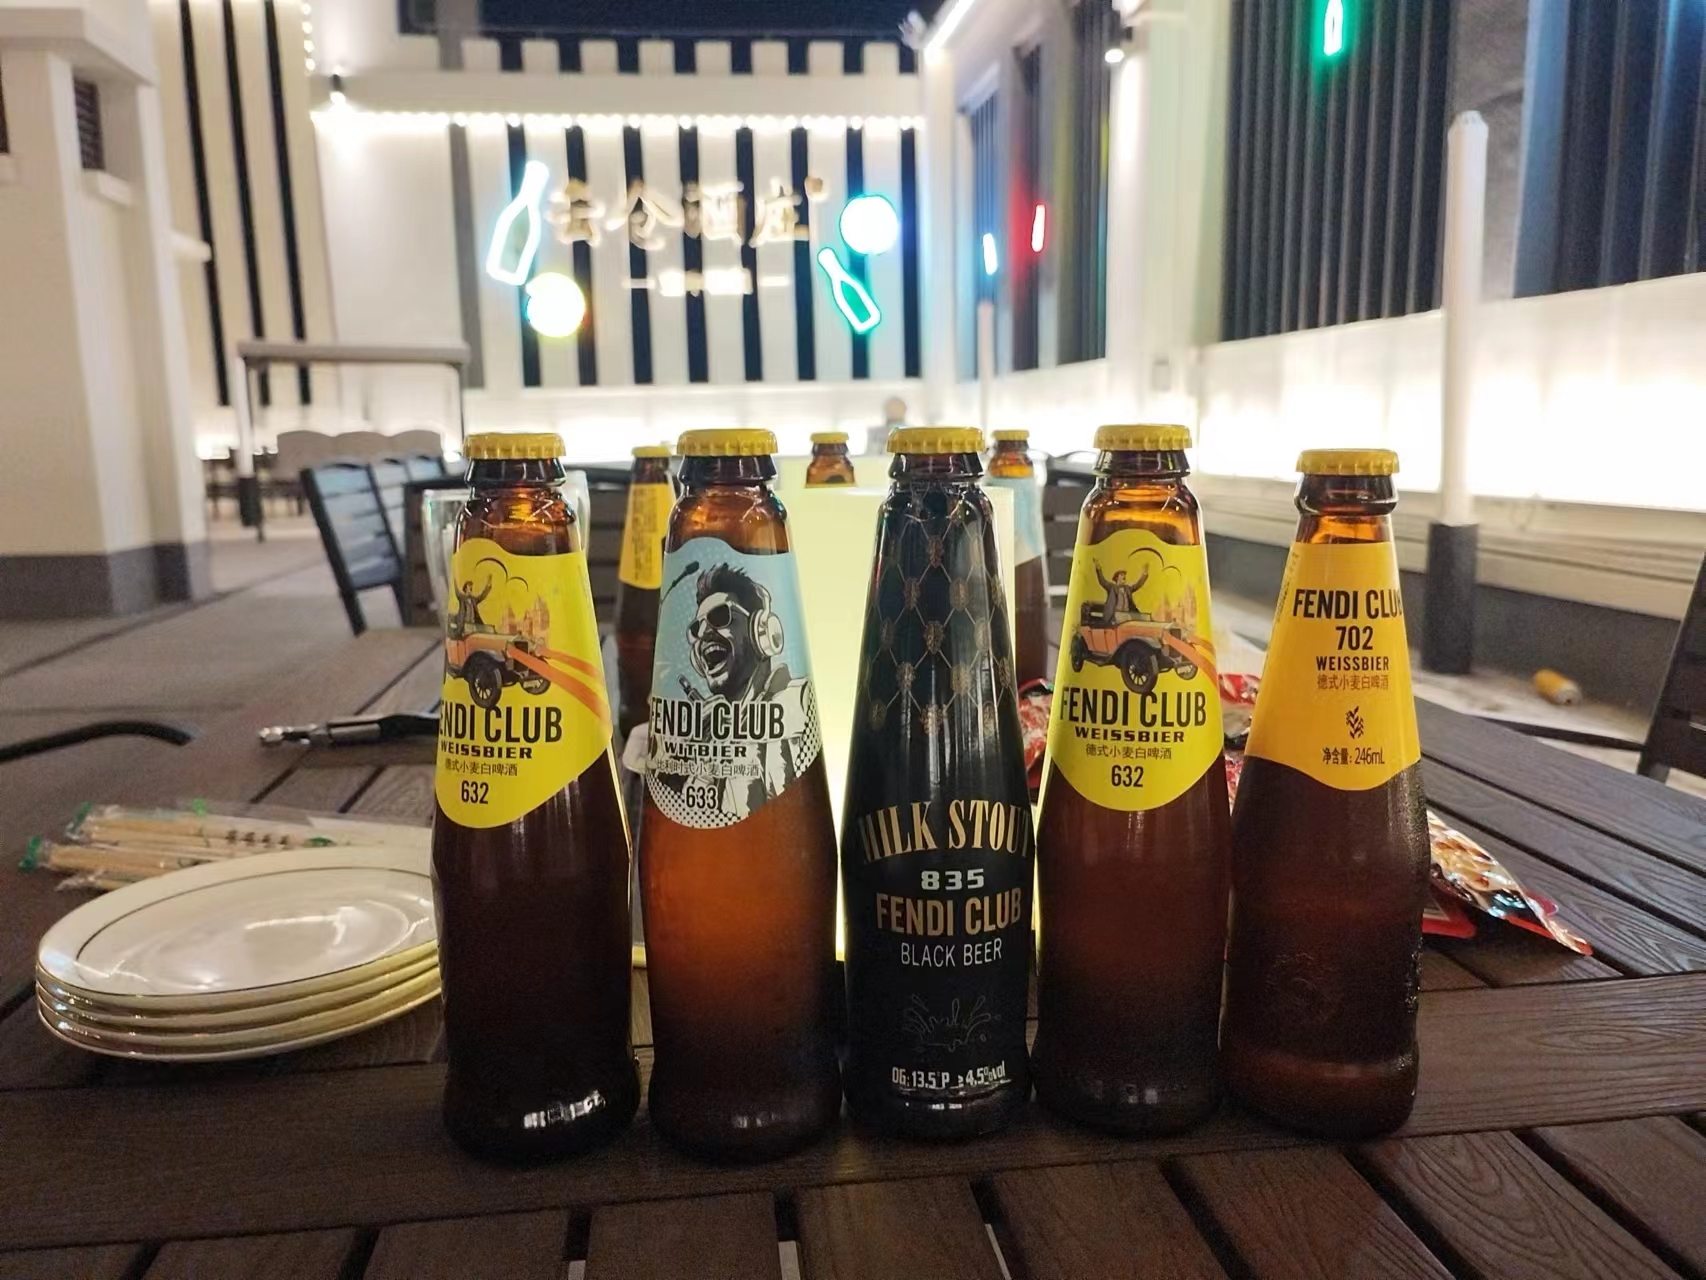 FENDI CLUB精酿啤酒馆与传统啤酒销售模式的不同